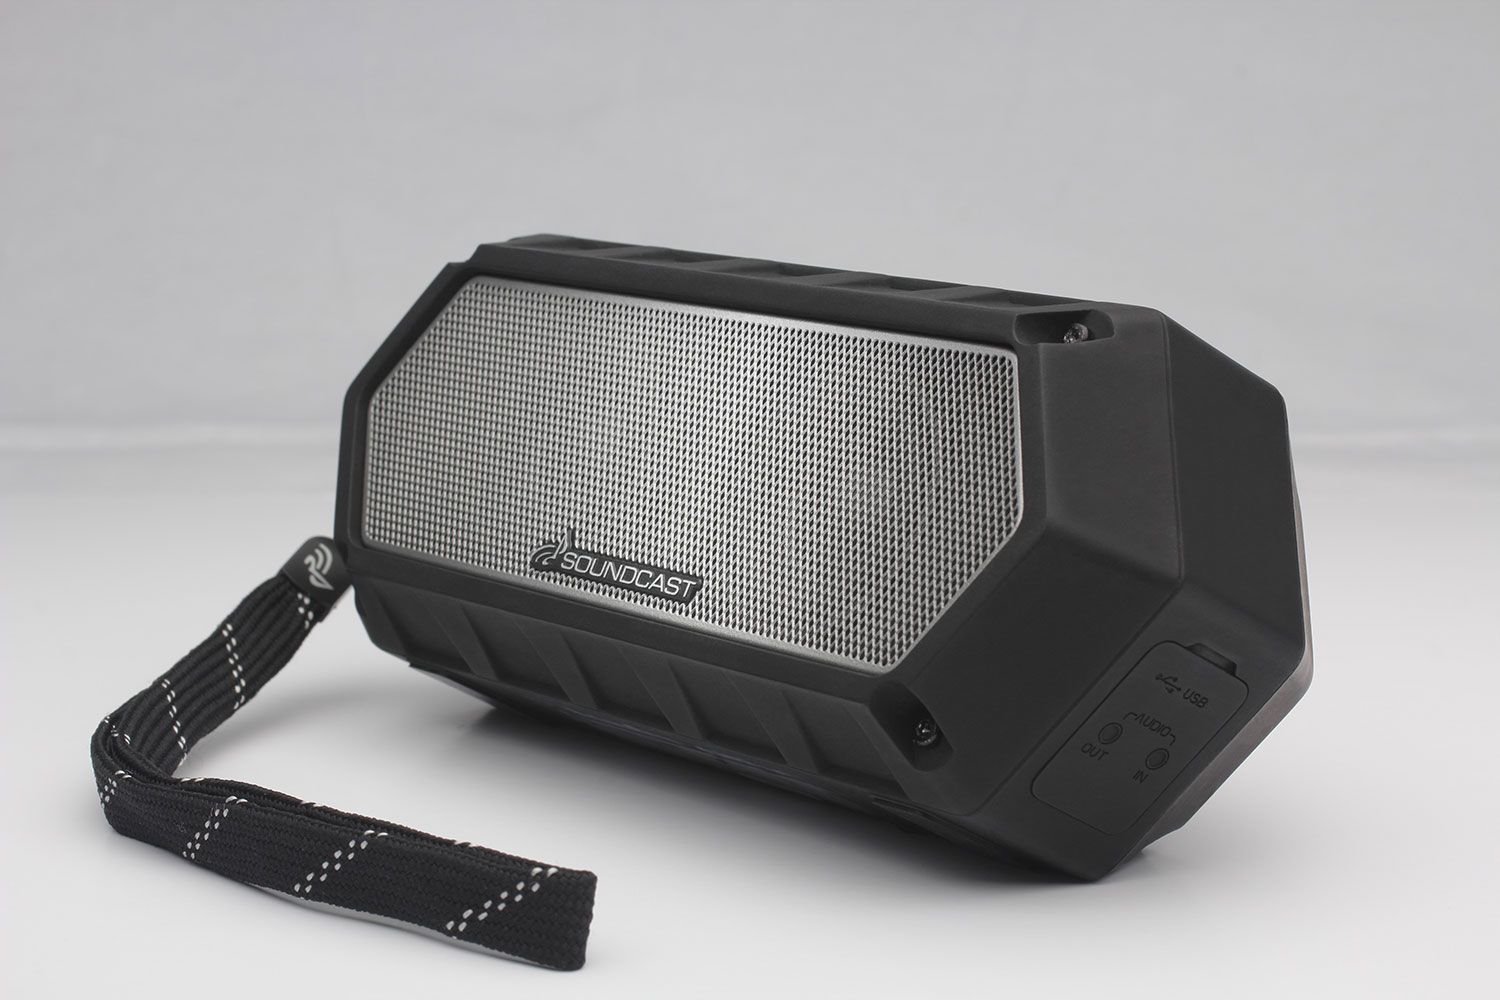 soundcast vg 1 waterproof bluetooth speaker announced 4